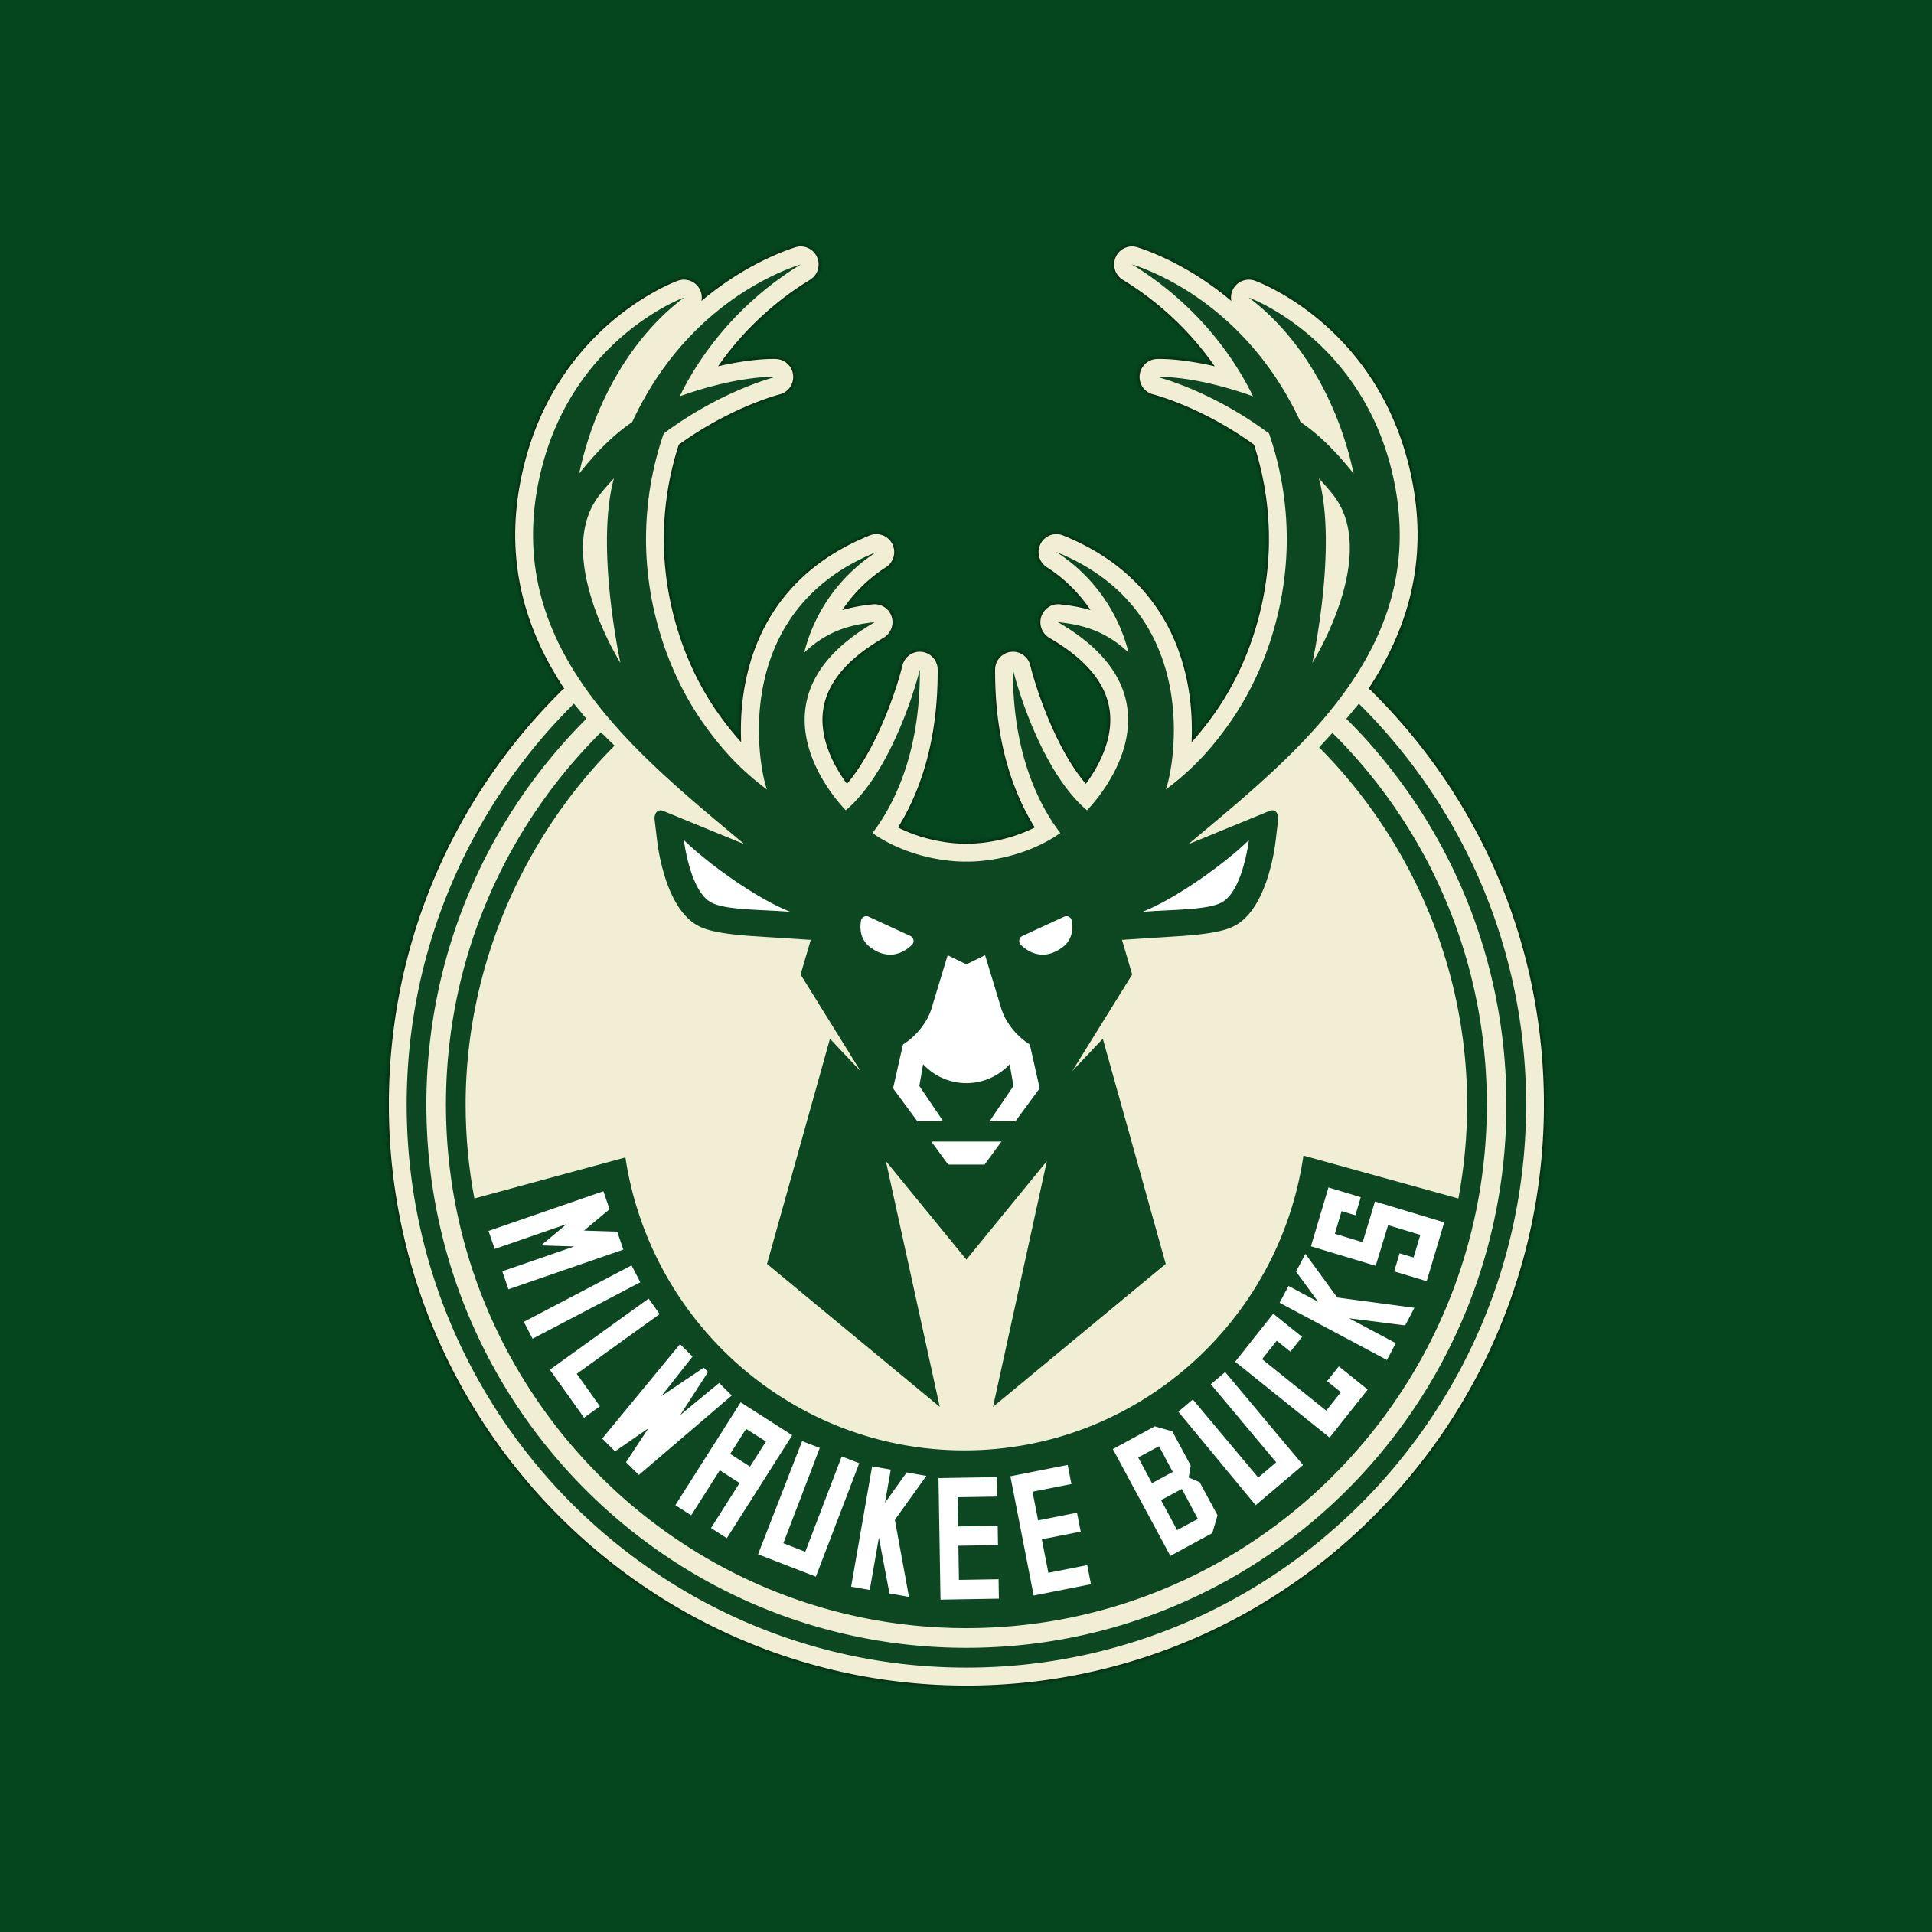 Milwaukee Bucks Wallpapers - Top Free Milwaukee Bucks ...